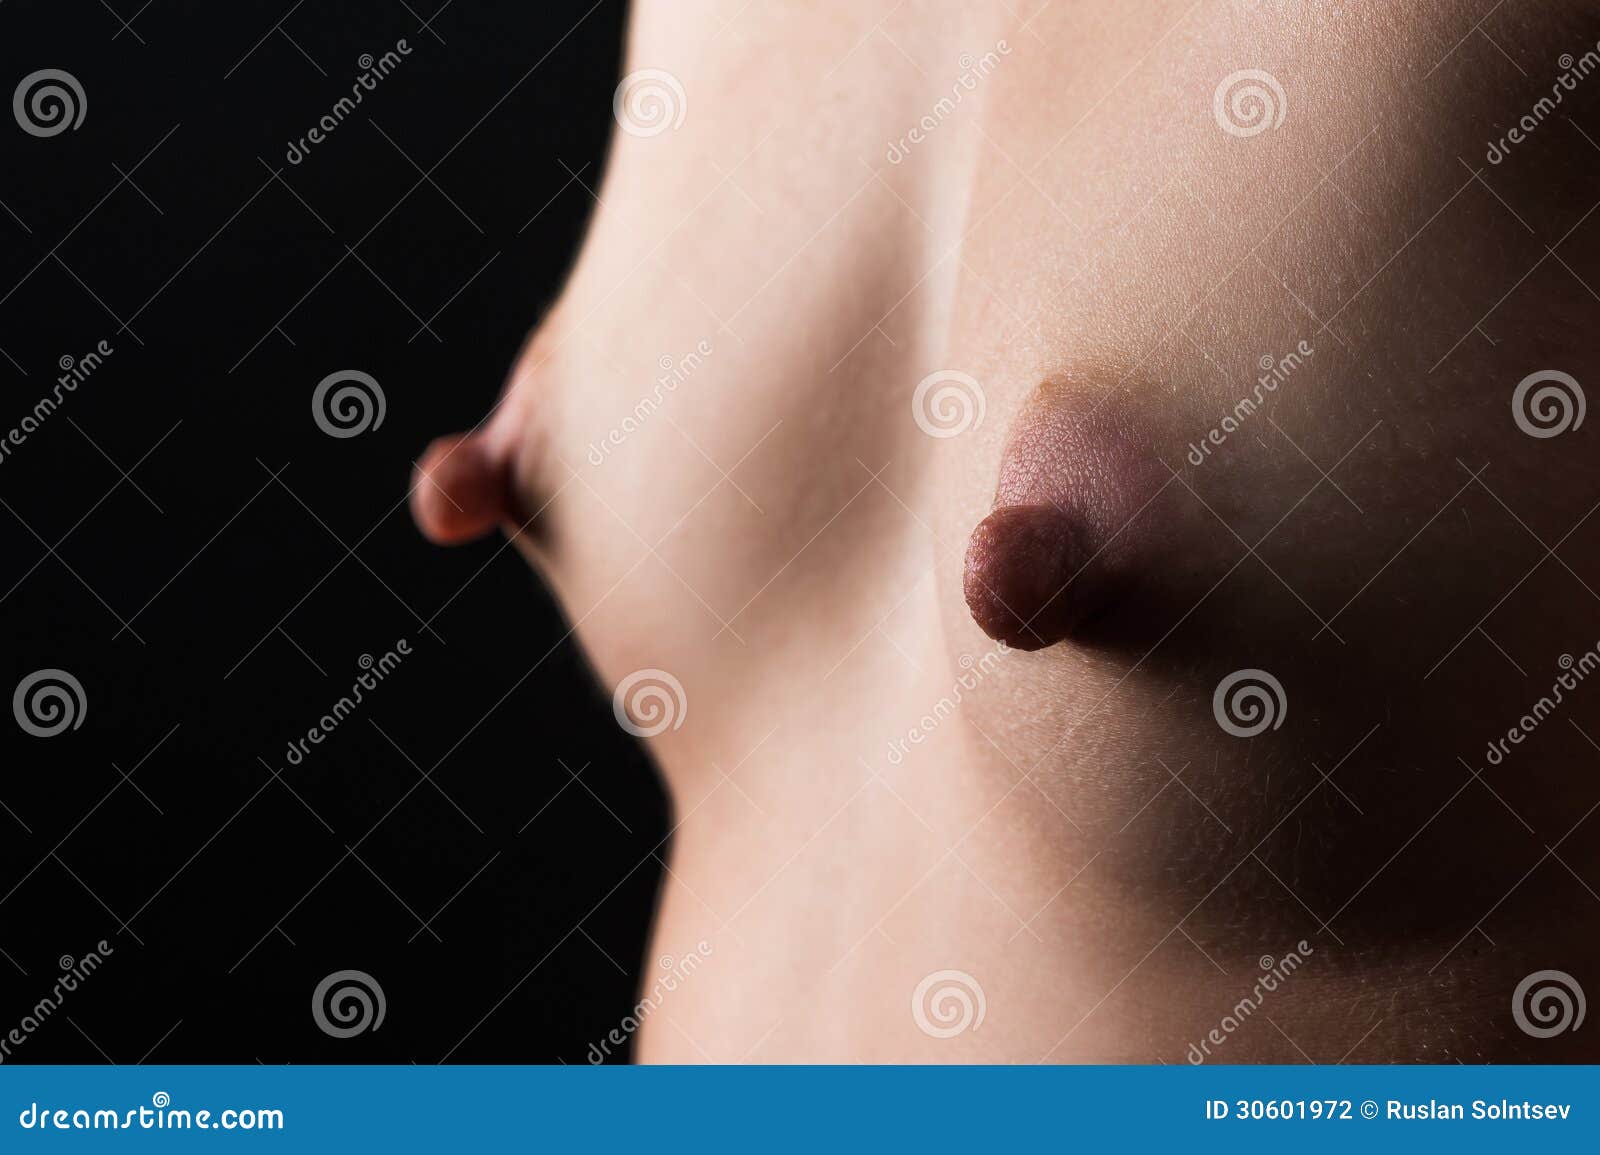 Big nipples on small breasts